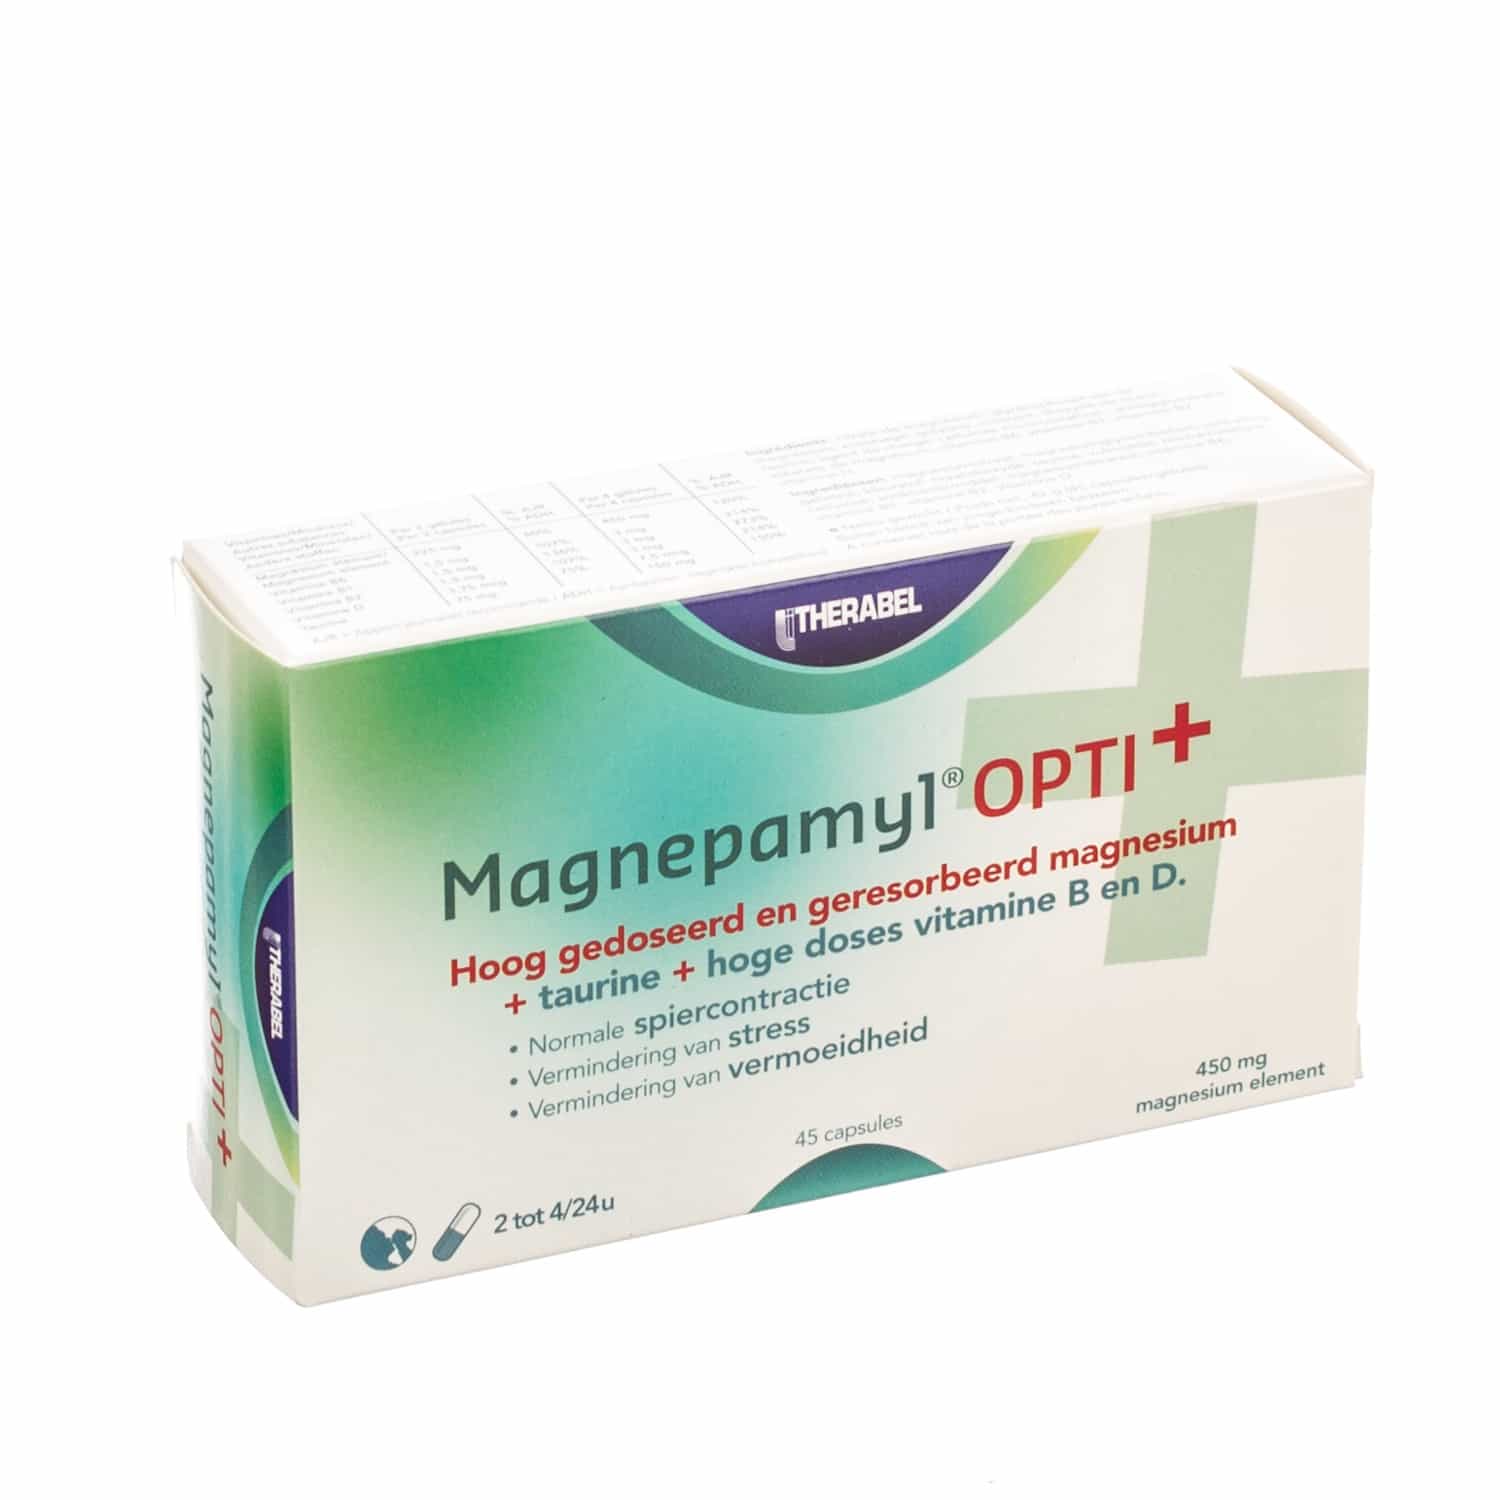 Magnepamyl Opti+